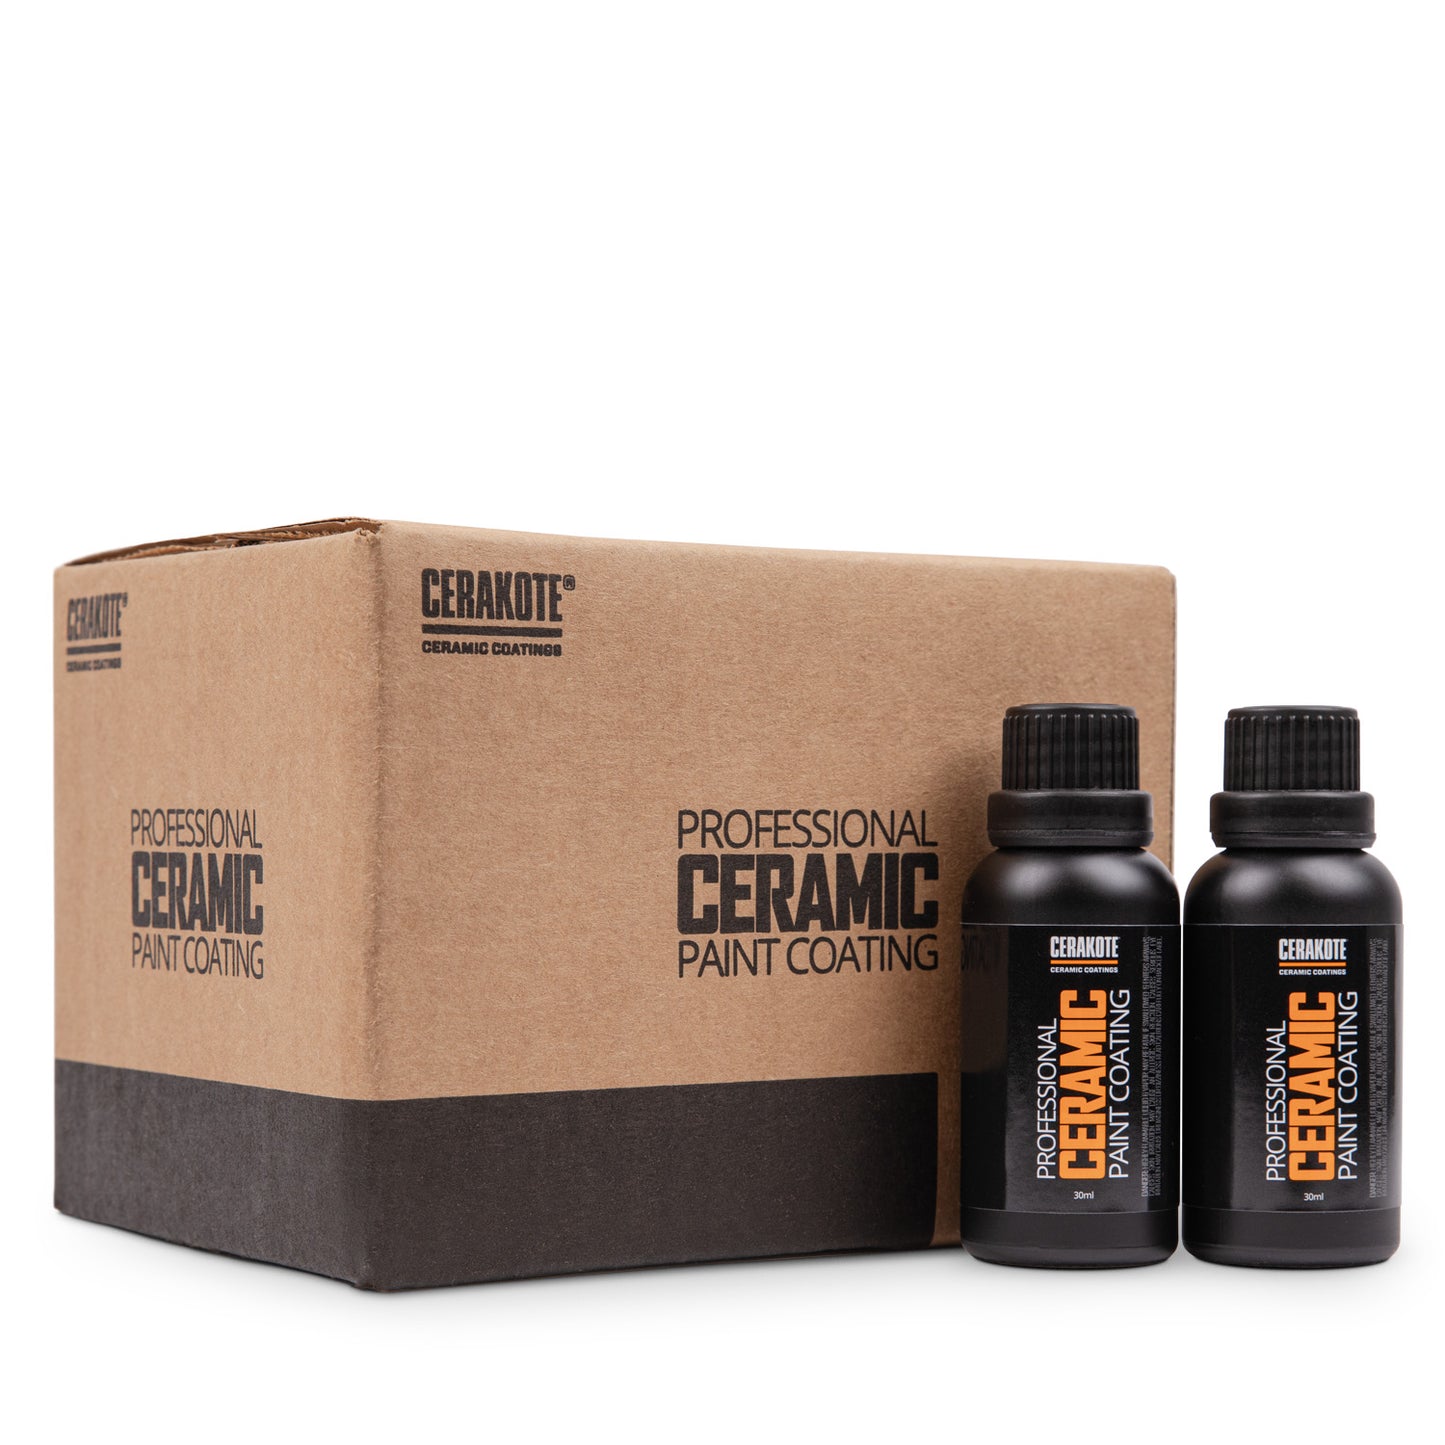 CERAKOTE® Professional Ceramic Paint Coating Pro Pack – Black Box